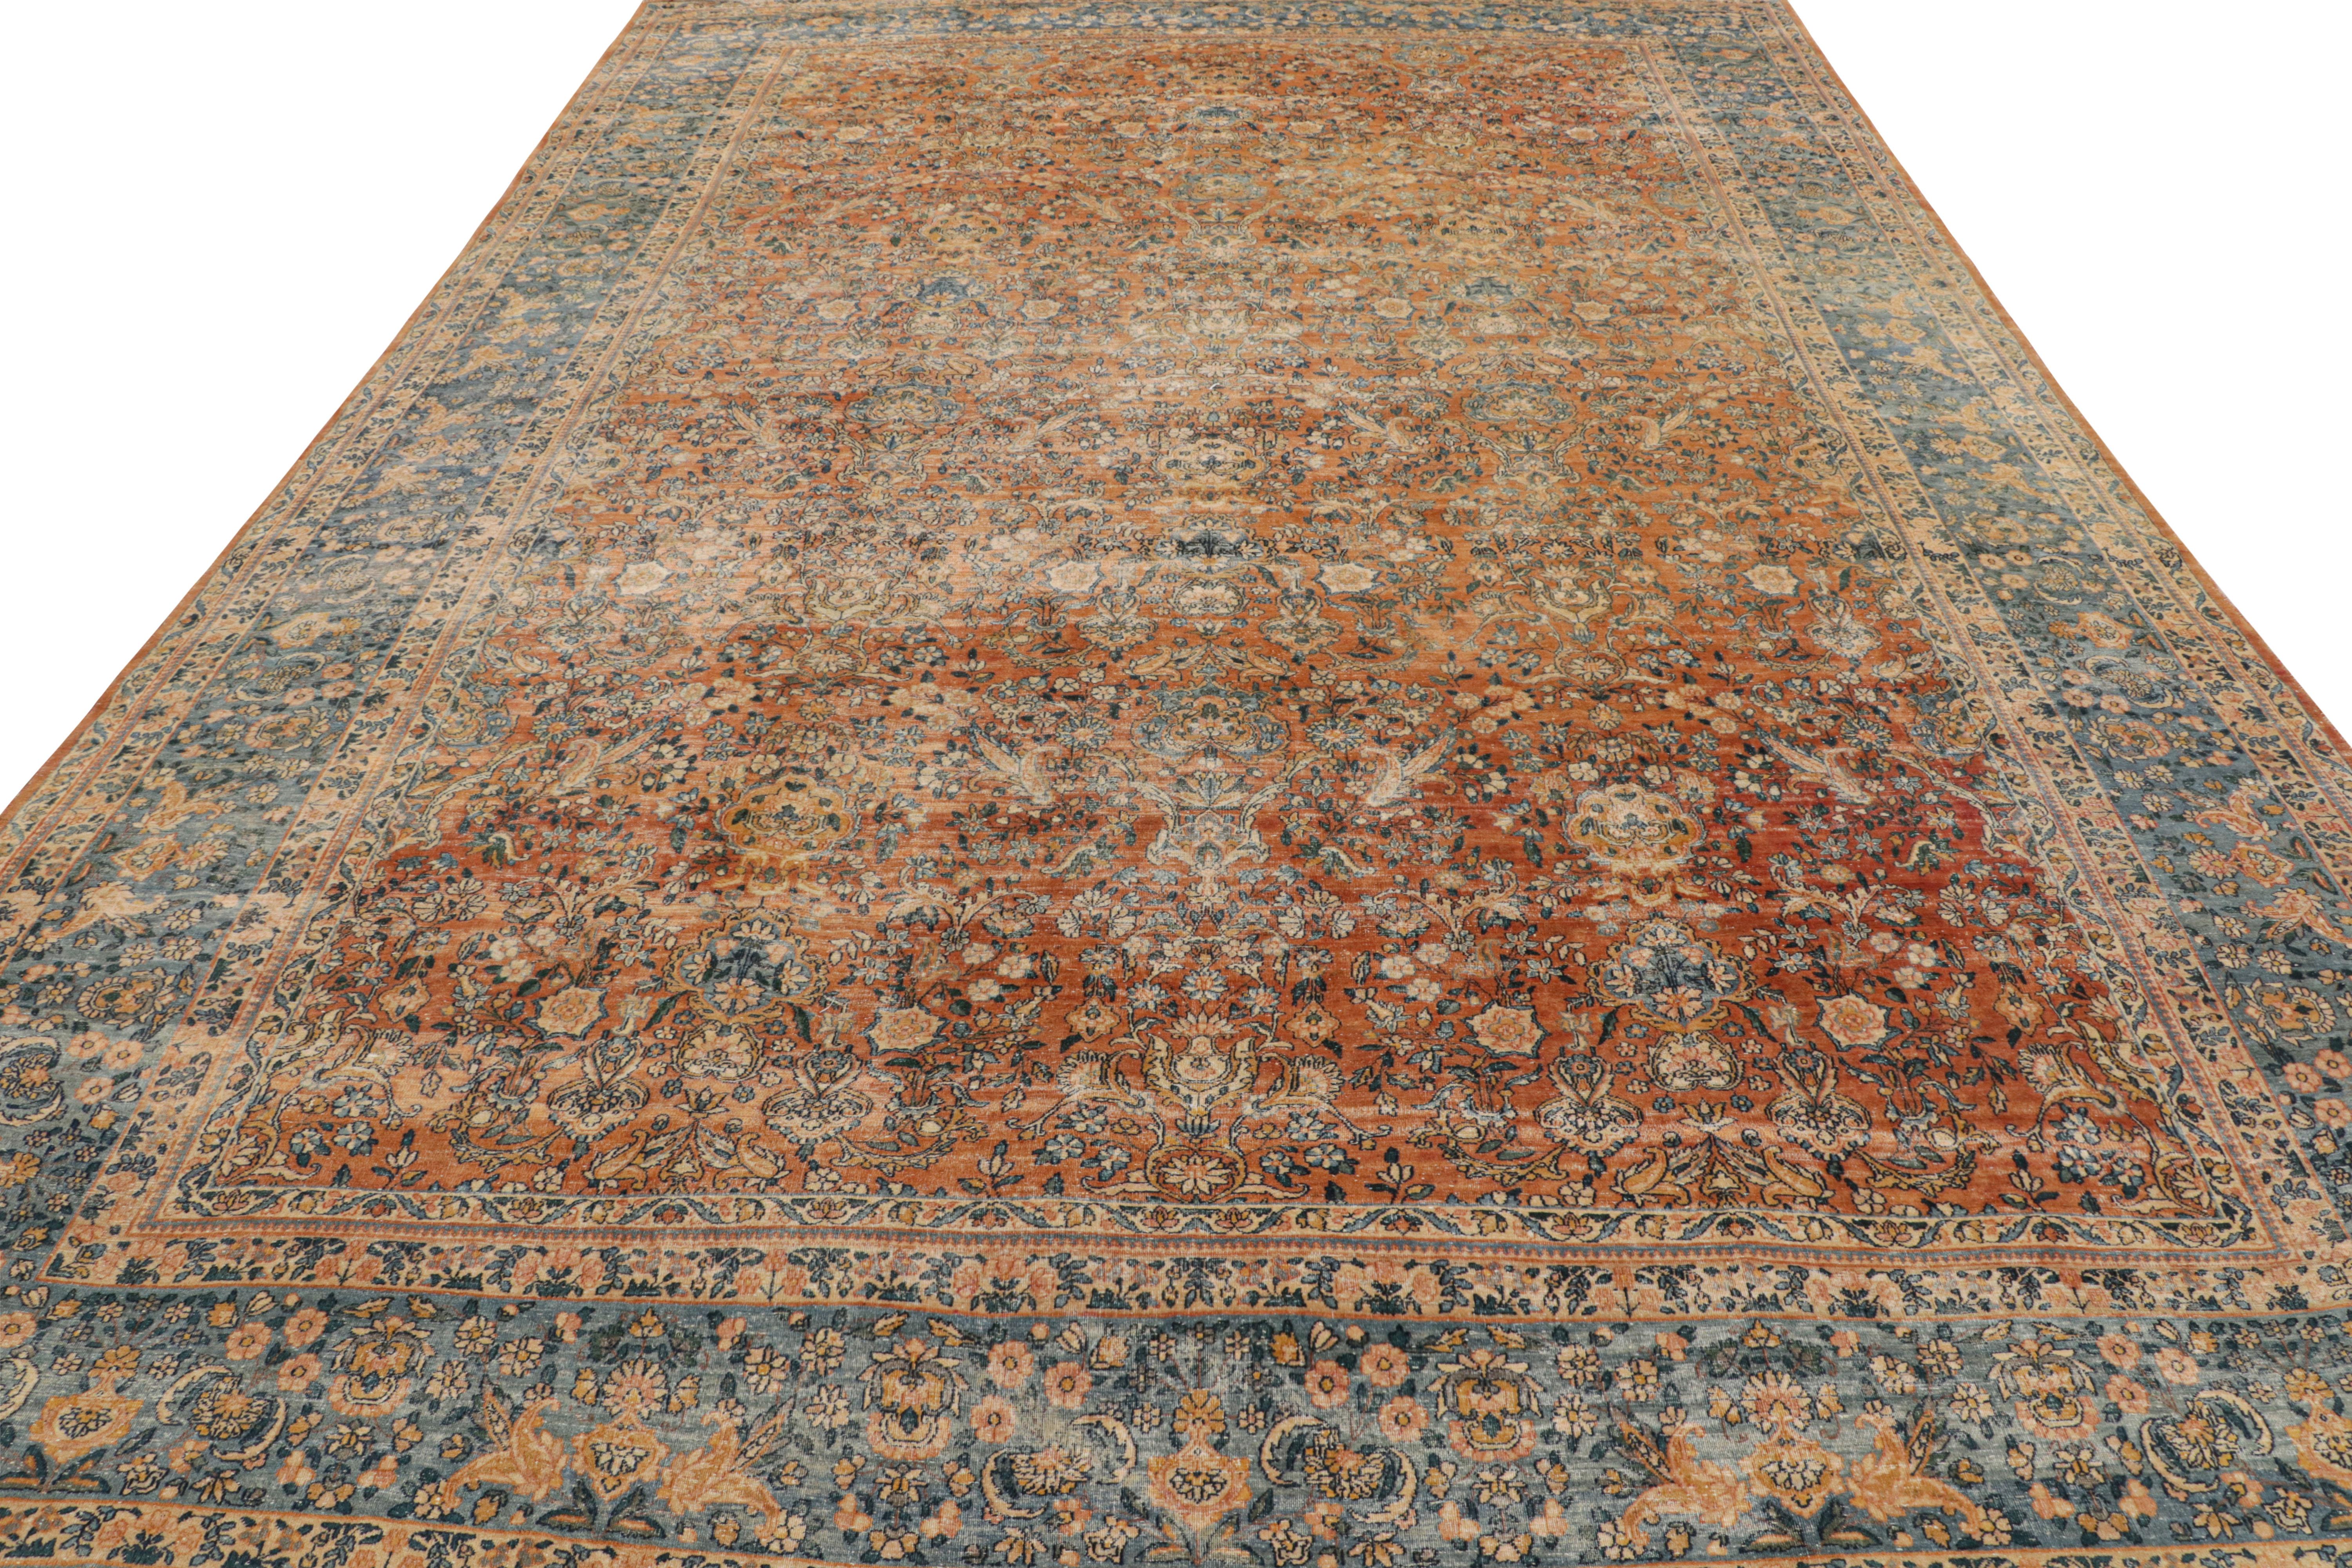 Early 20th Century Antique Kerman Lavar Orange-Brown & Blue Wool Persian Floral Rug by Rug & Kilim For Sale